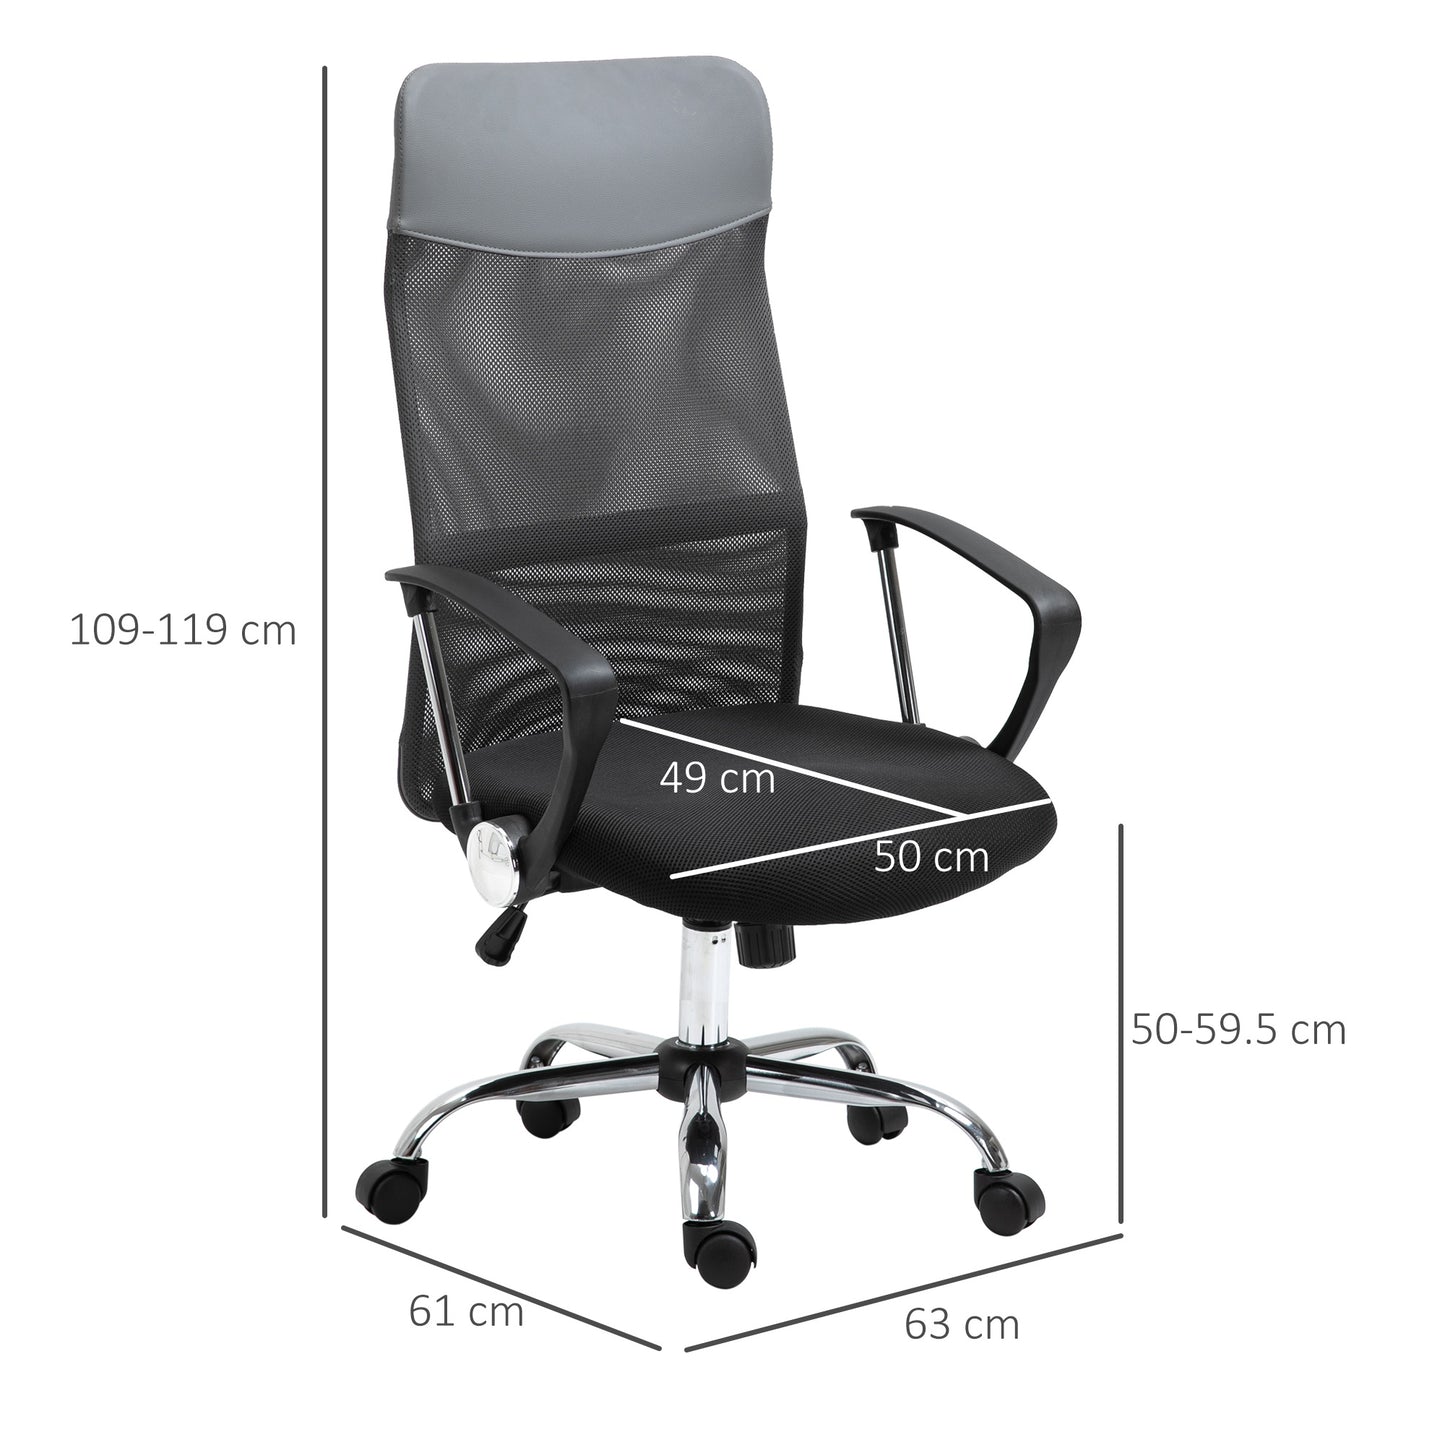 HOMCOM Executive Office Desk Chair High Back Mesh Chair Seat - Grey